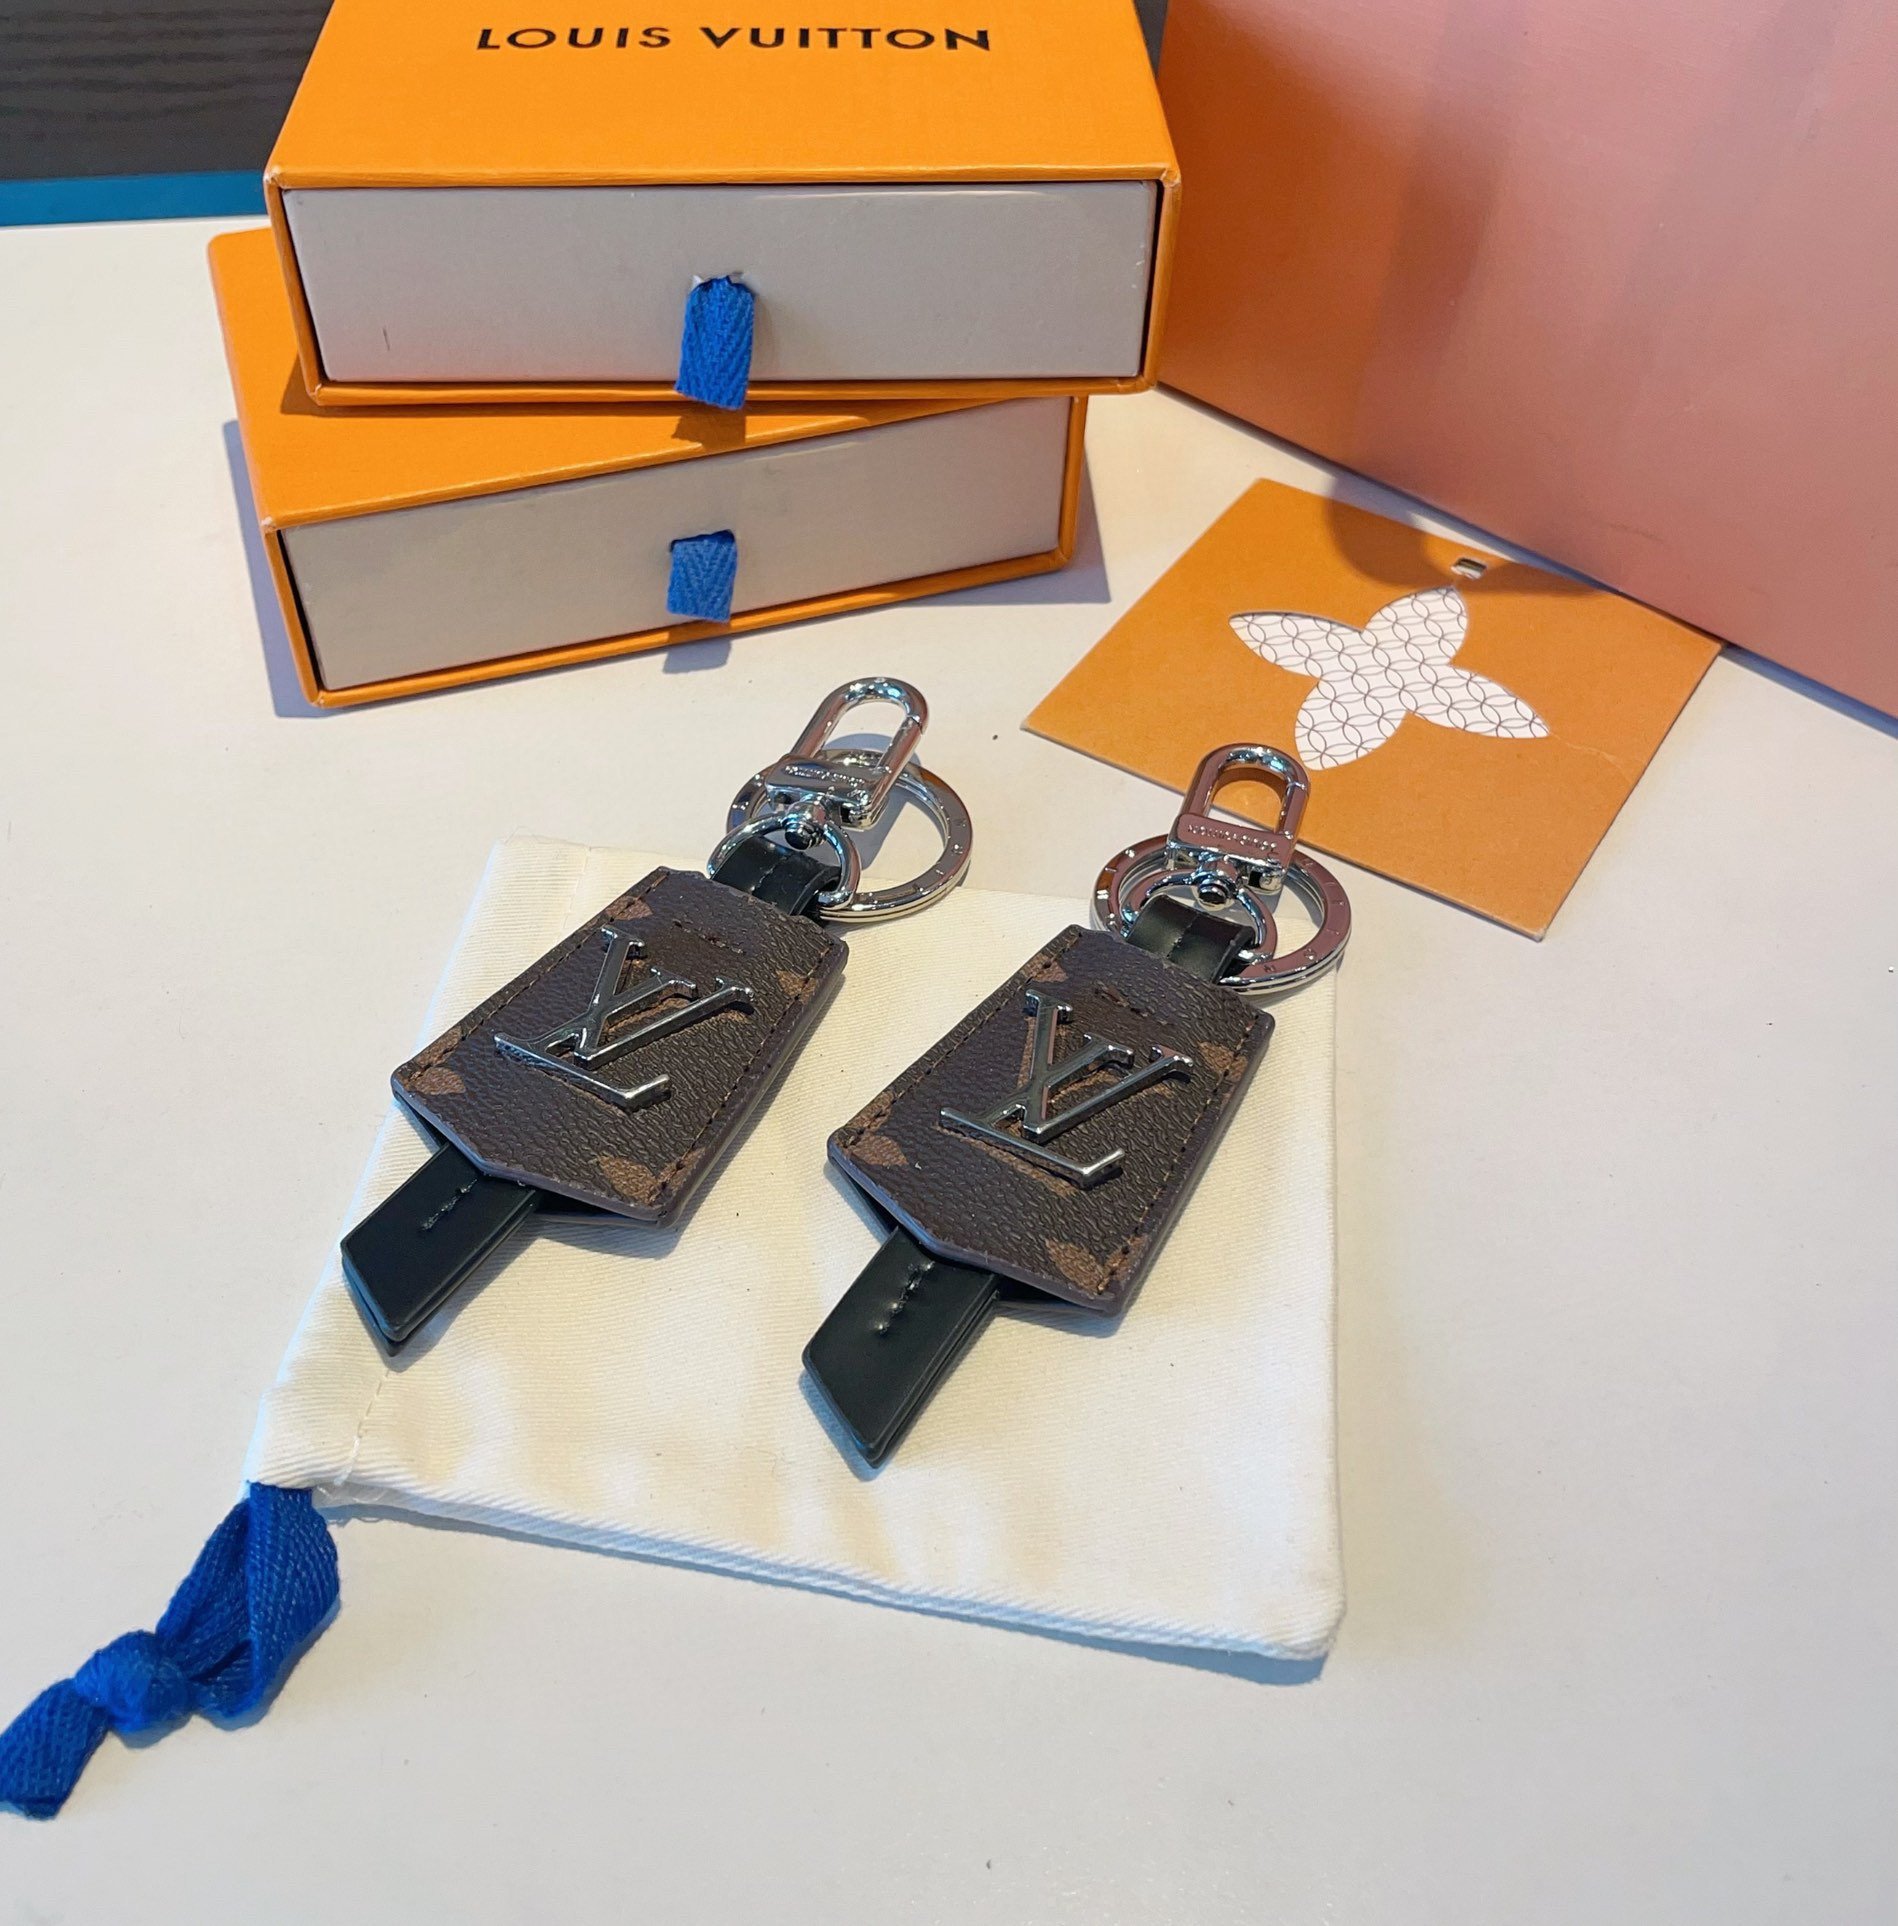 LOUISVUITTON官网M63620LVCLOCHES-CLES包饰与钥匙扣借鉴旅行袋中的钥匙扣设计